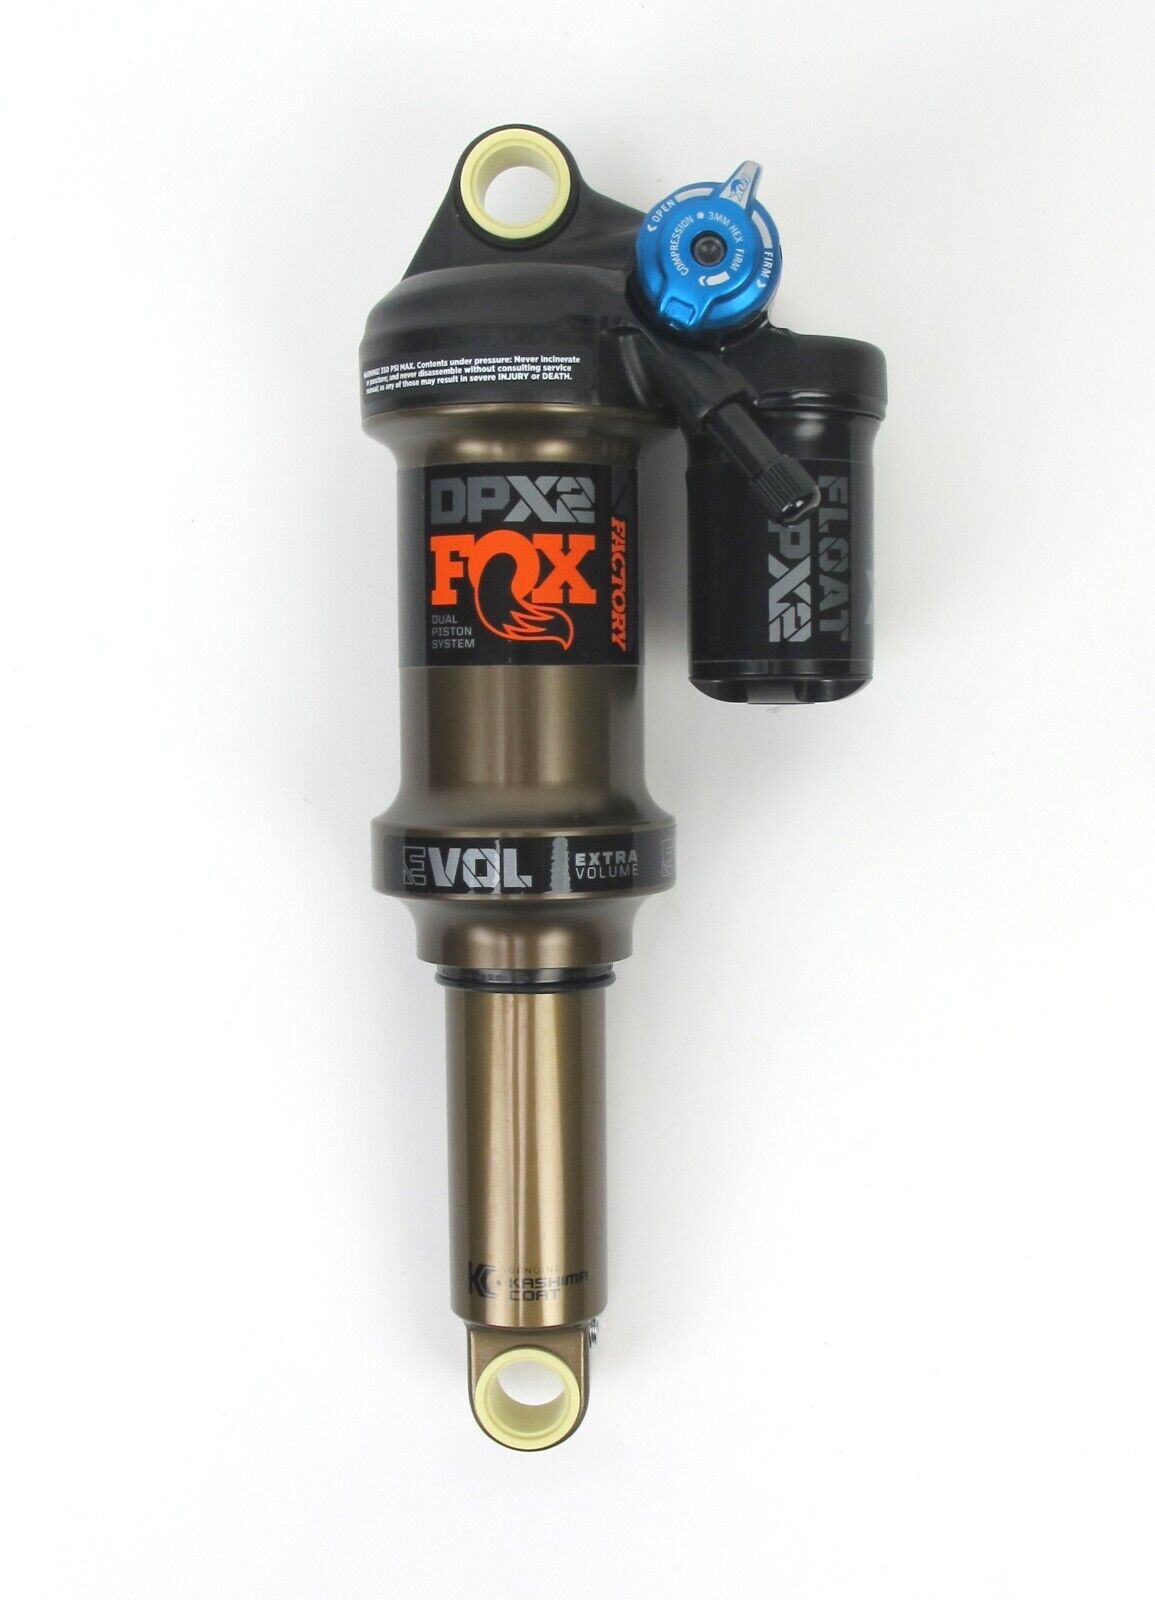 FOX Factory FLOAT DPX2 7.875" X 2.25" EVOL LV 3-Position Lever Rear Shock